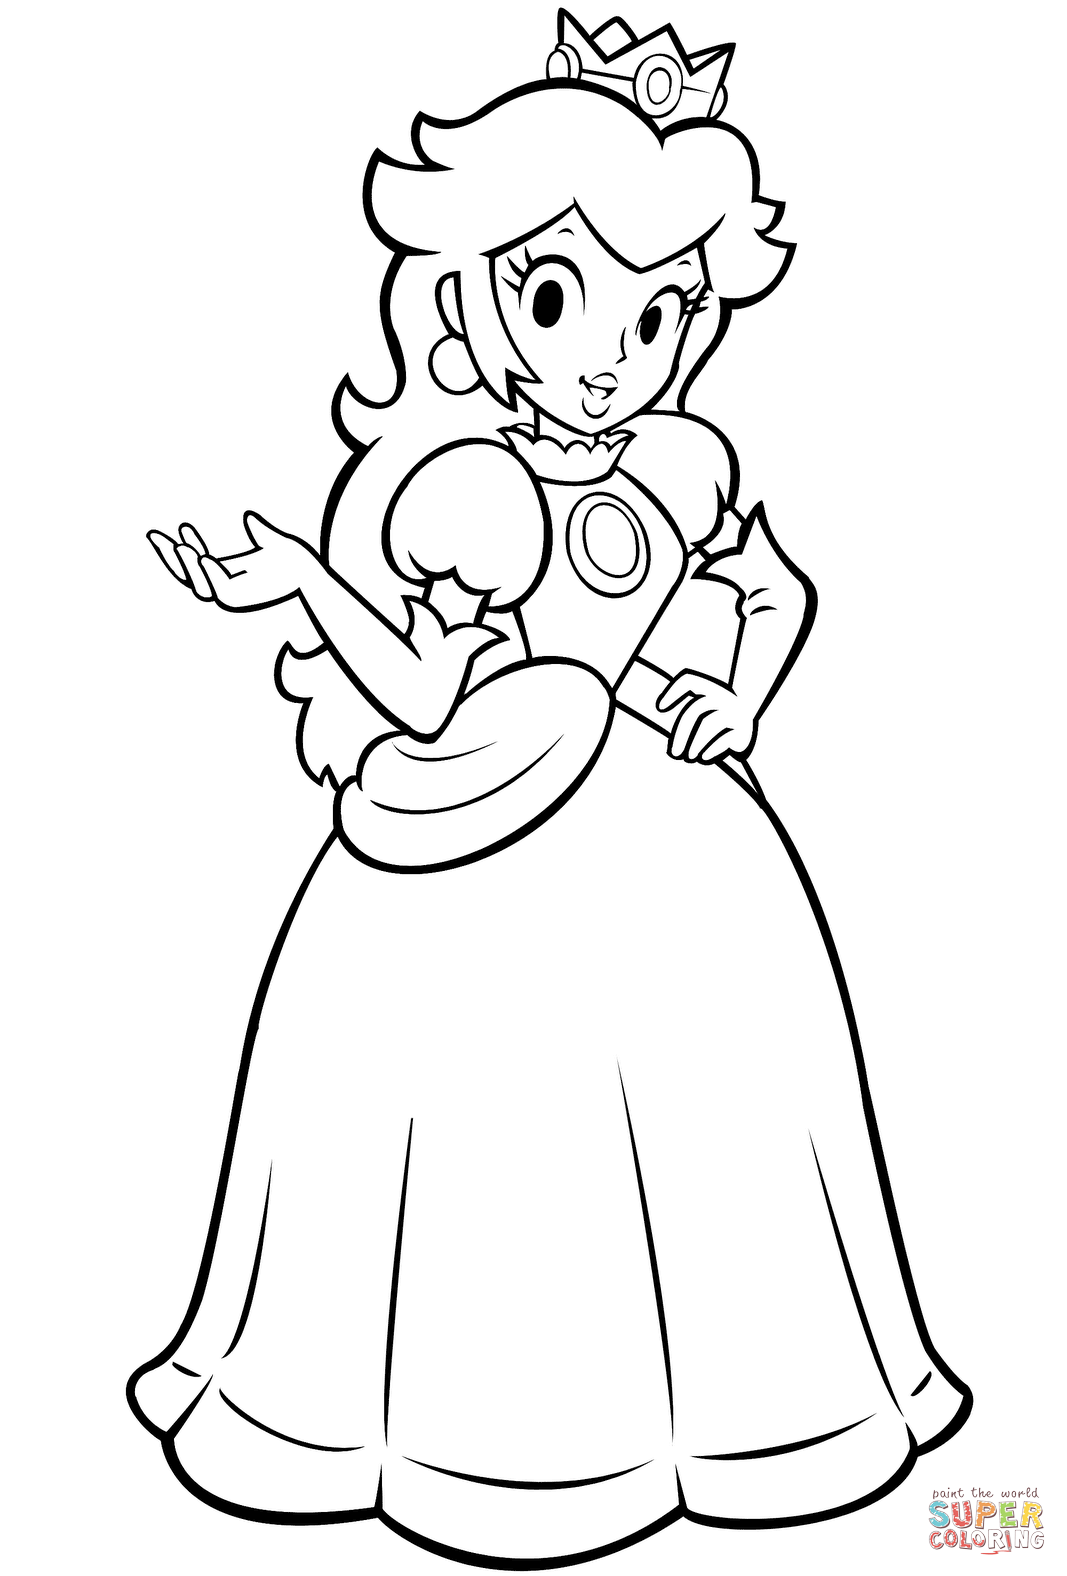 Mario bros princess peach coloring page free printable coloring pages